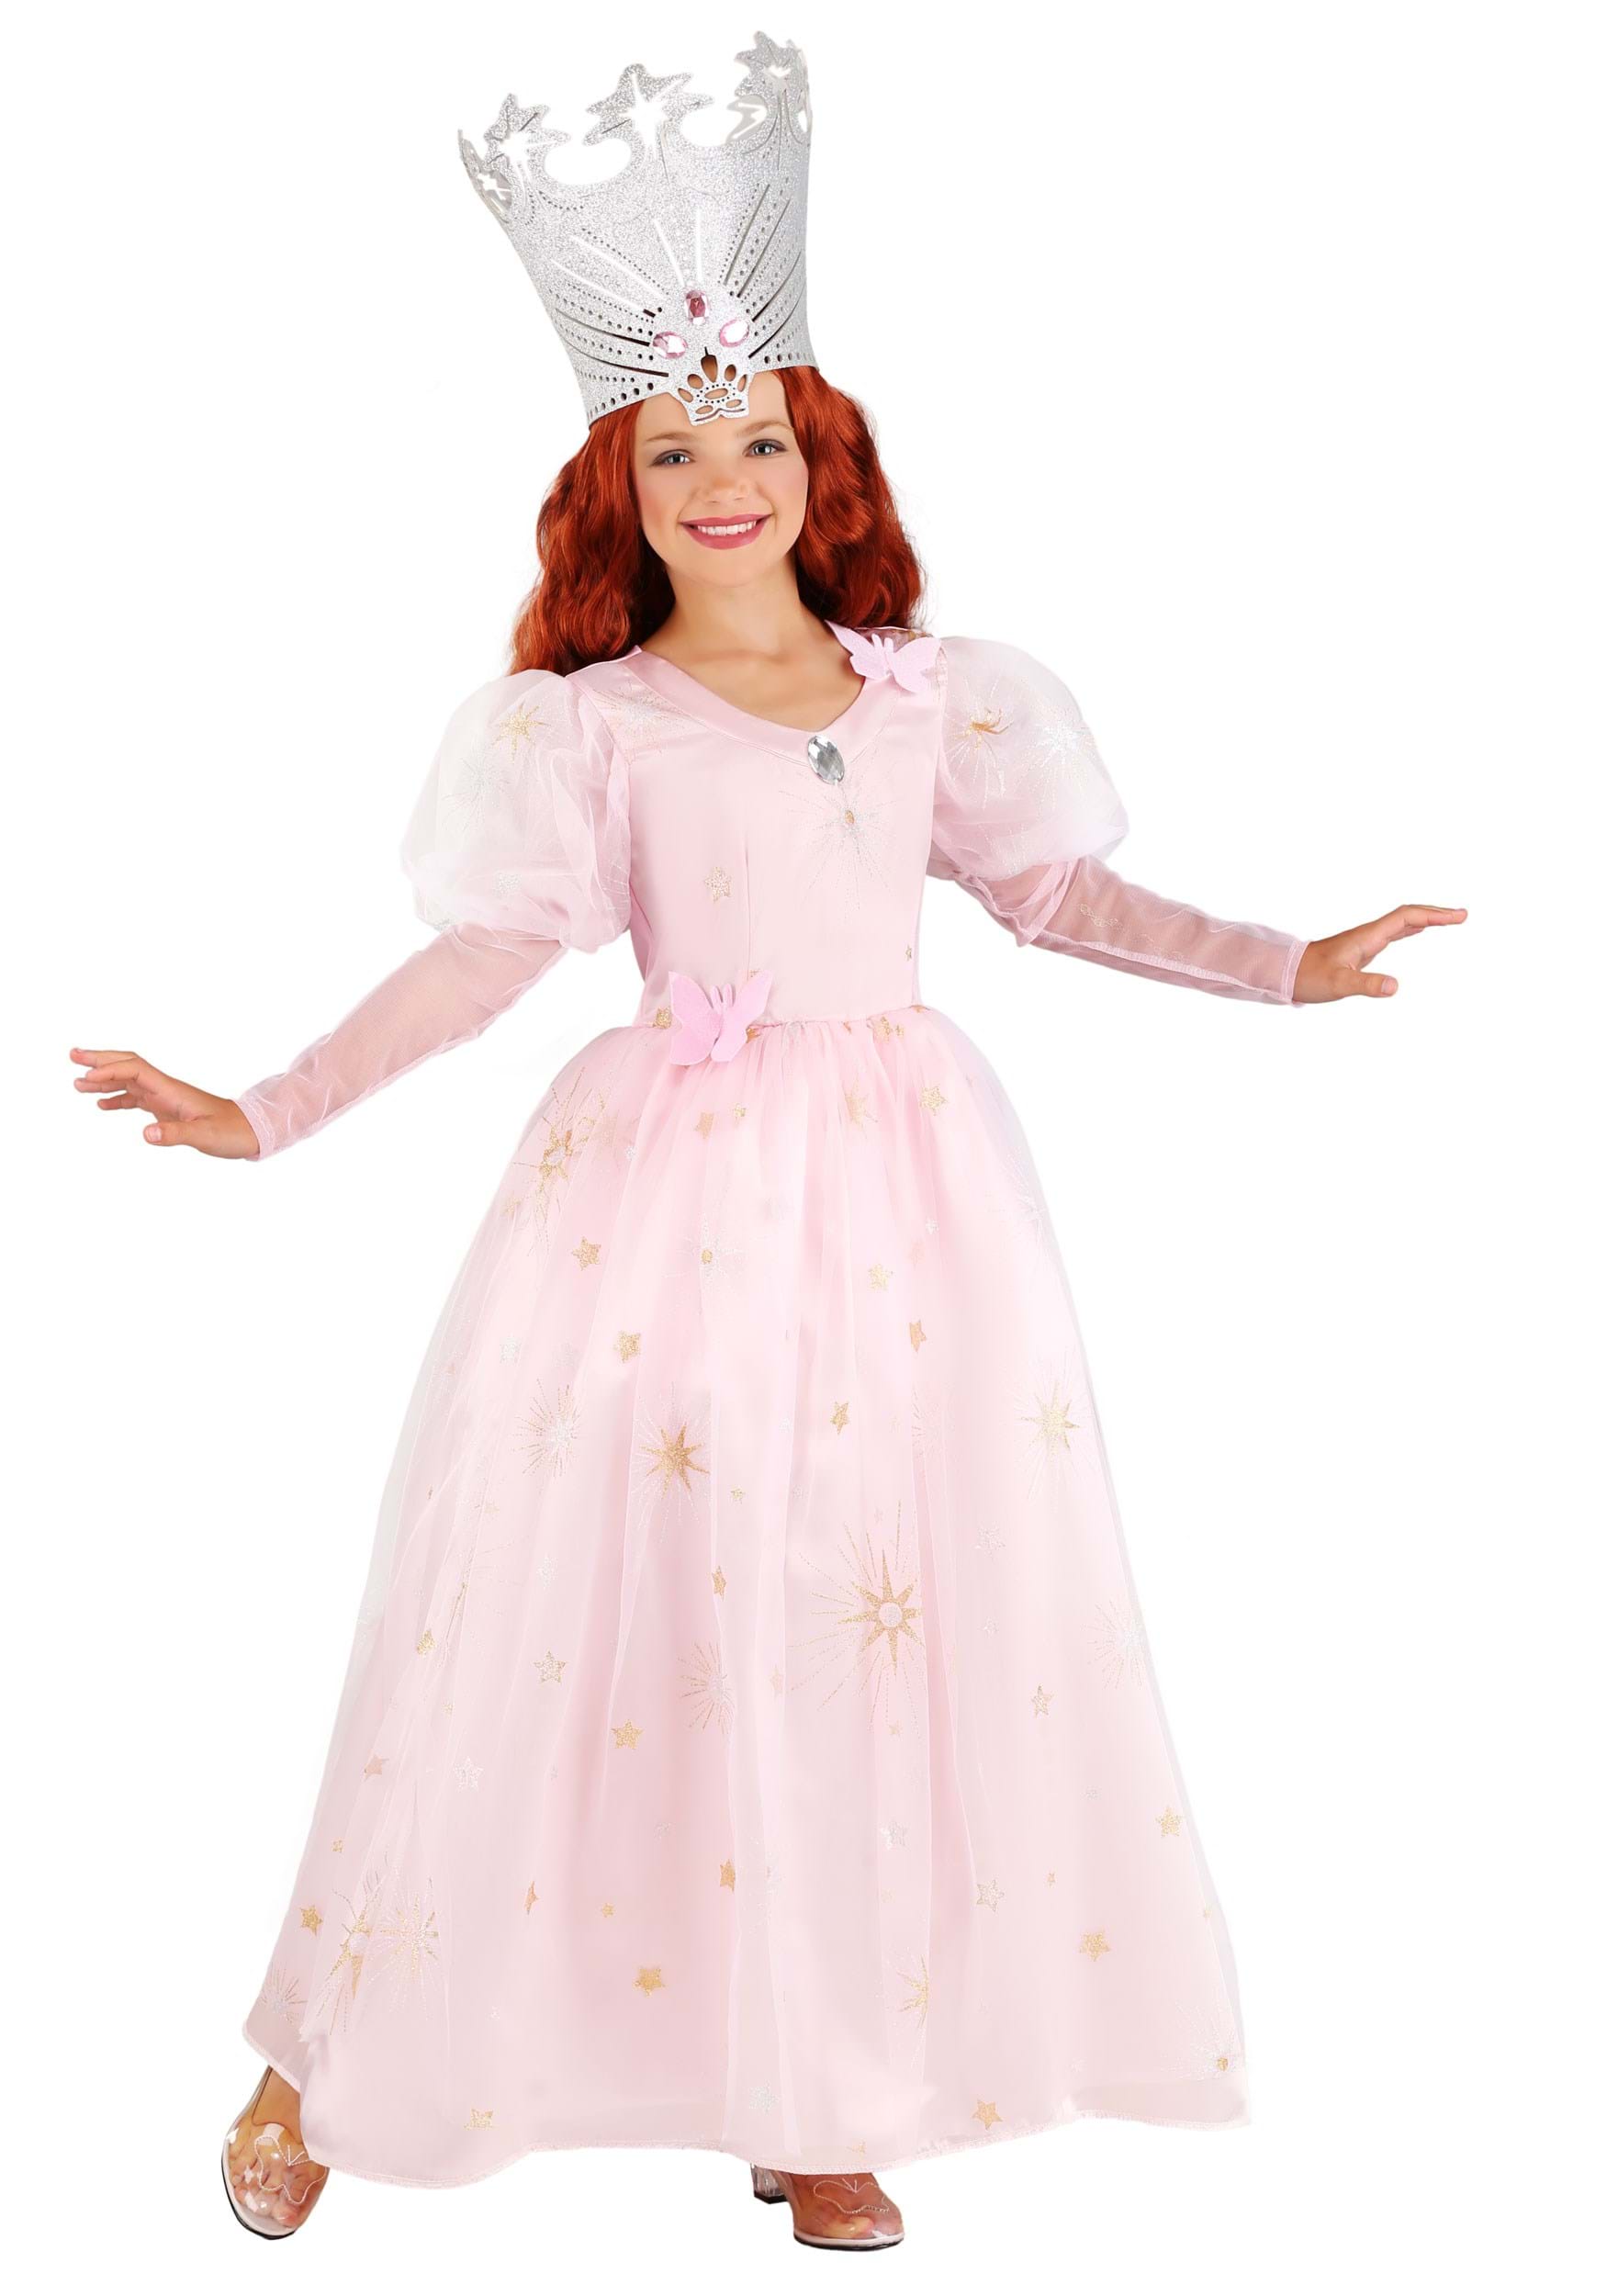 Photos - Fancy Dress Wizard FUN Costumes  of Oz Glinda Costume for Girls Orange/Pink FUN1706 